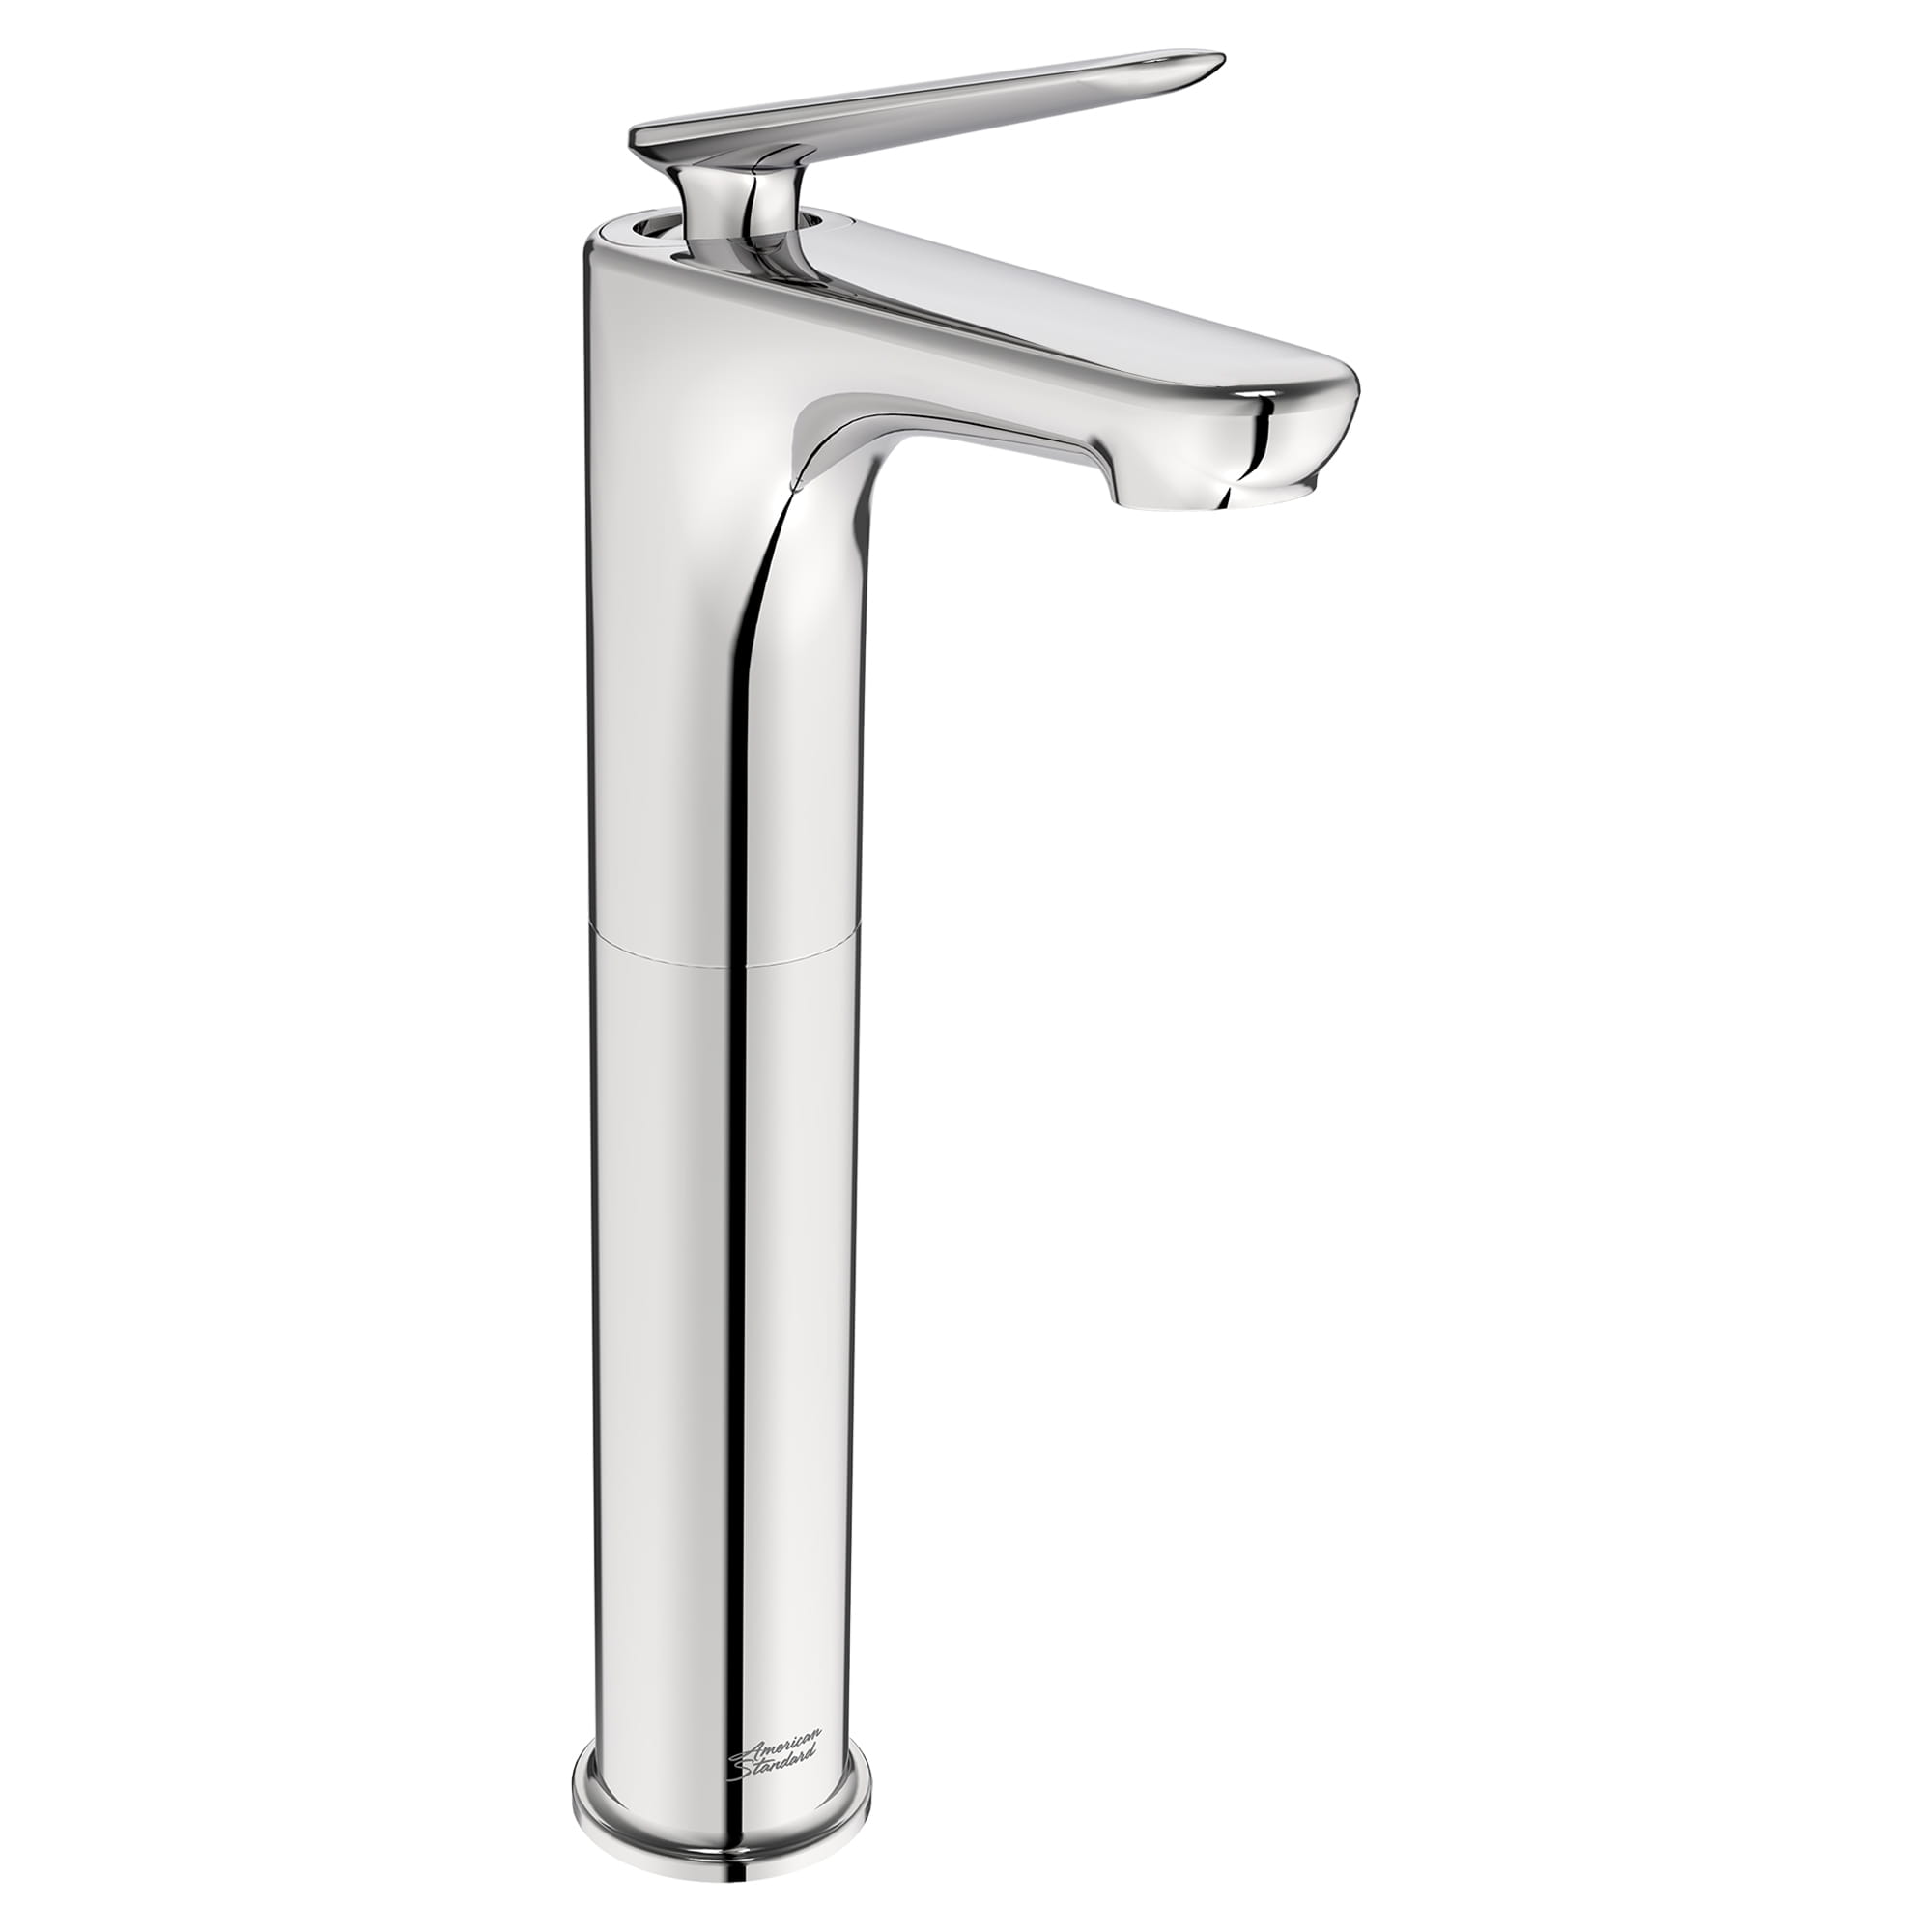 Studio™ S Single Hole Single-Handle Vessel Sink Faucet 1.2 gpm/4.5 L/min With Lever Handle